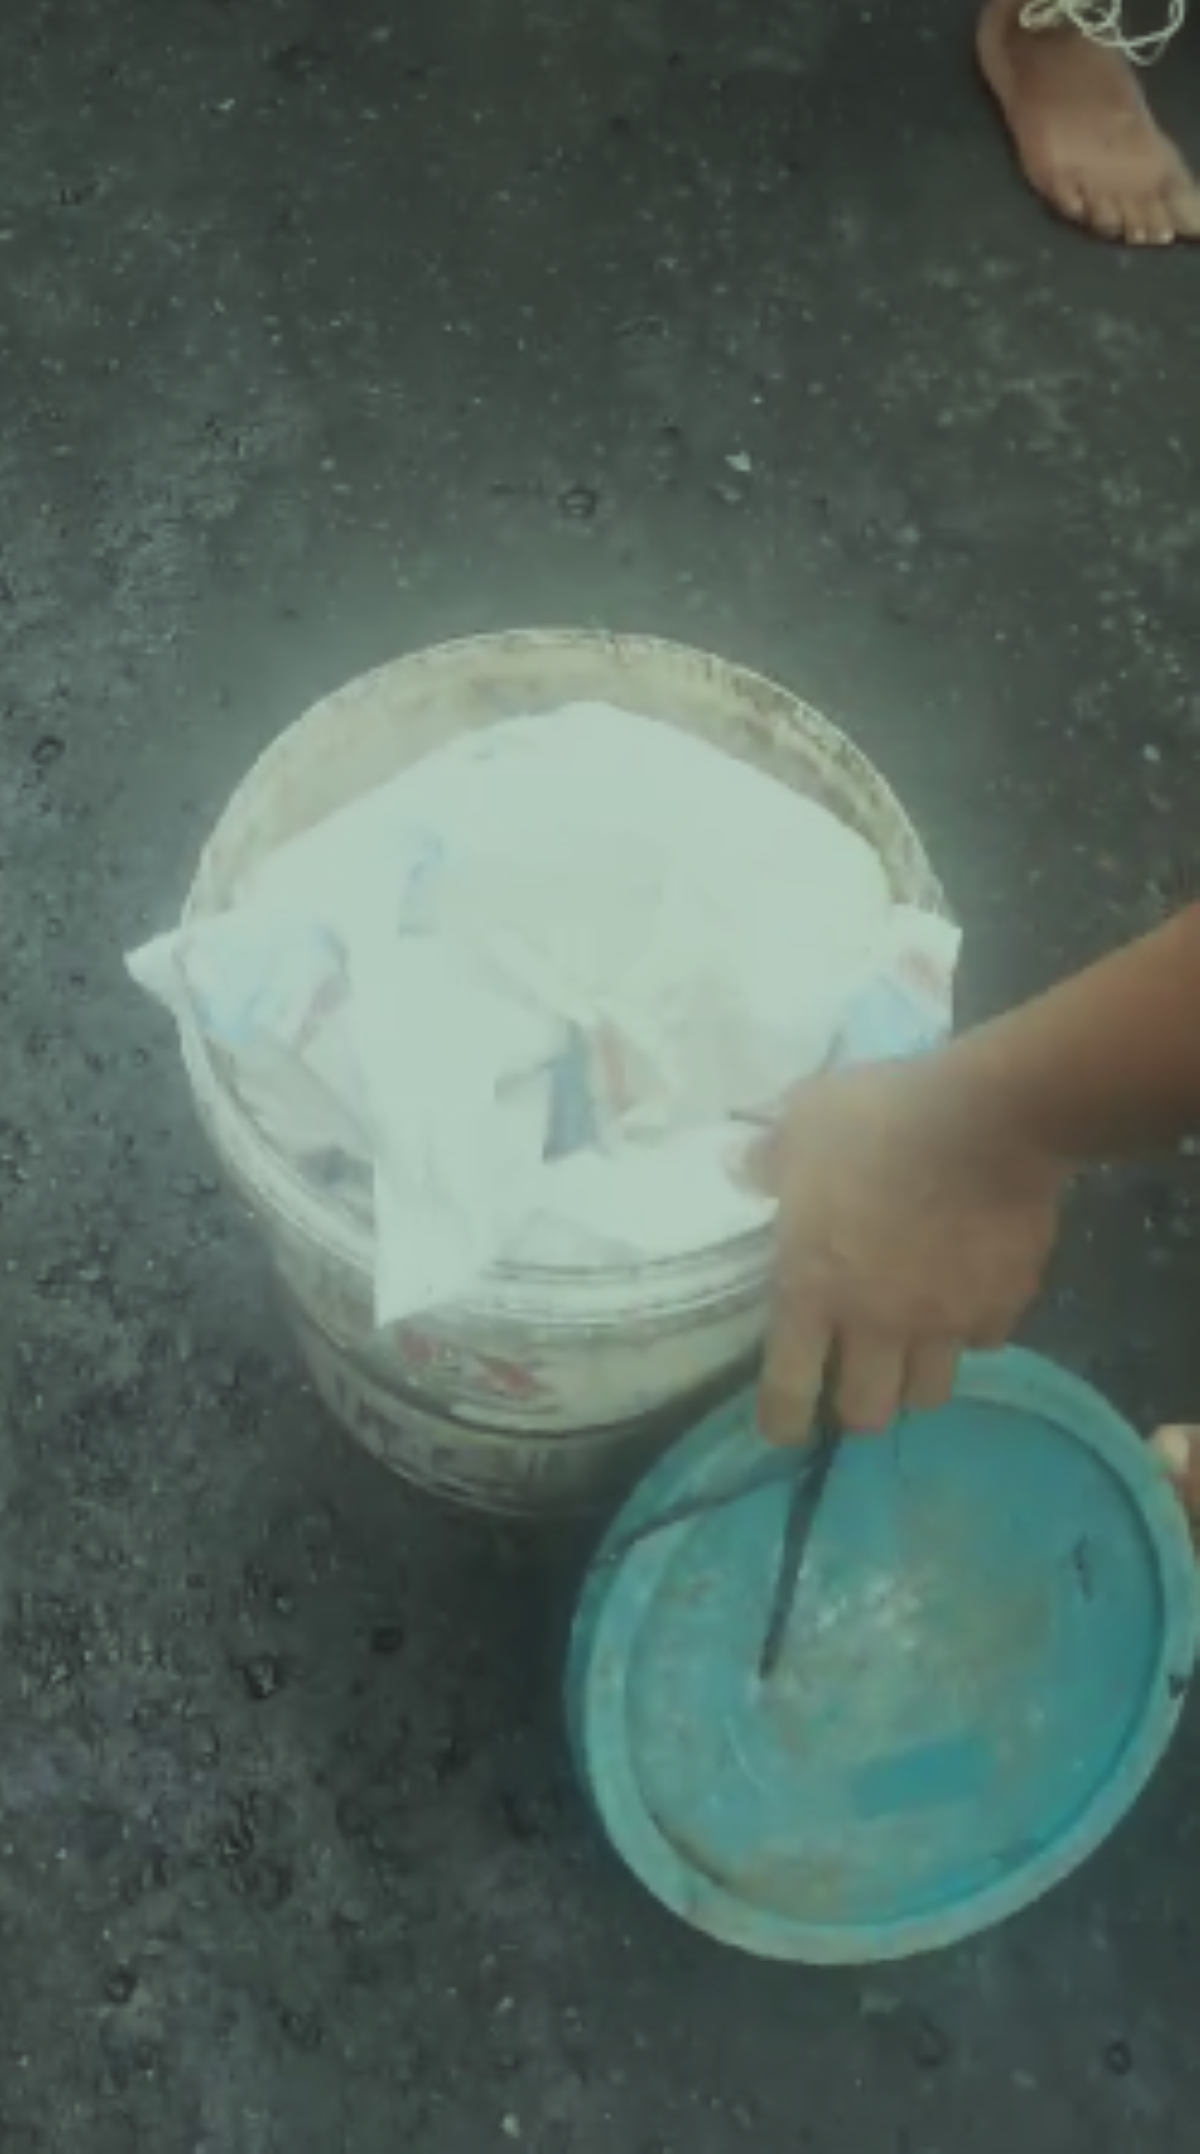 ember bekas cat yang digunakan pelaku untuk menyimpan anak babi